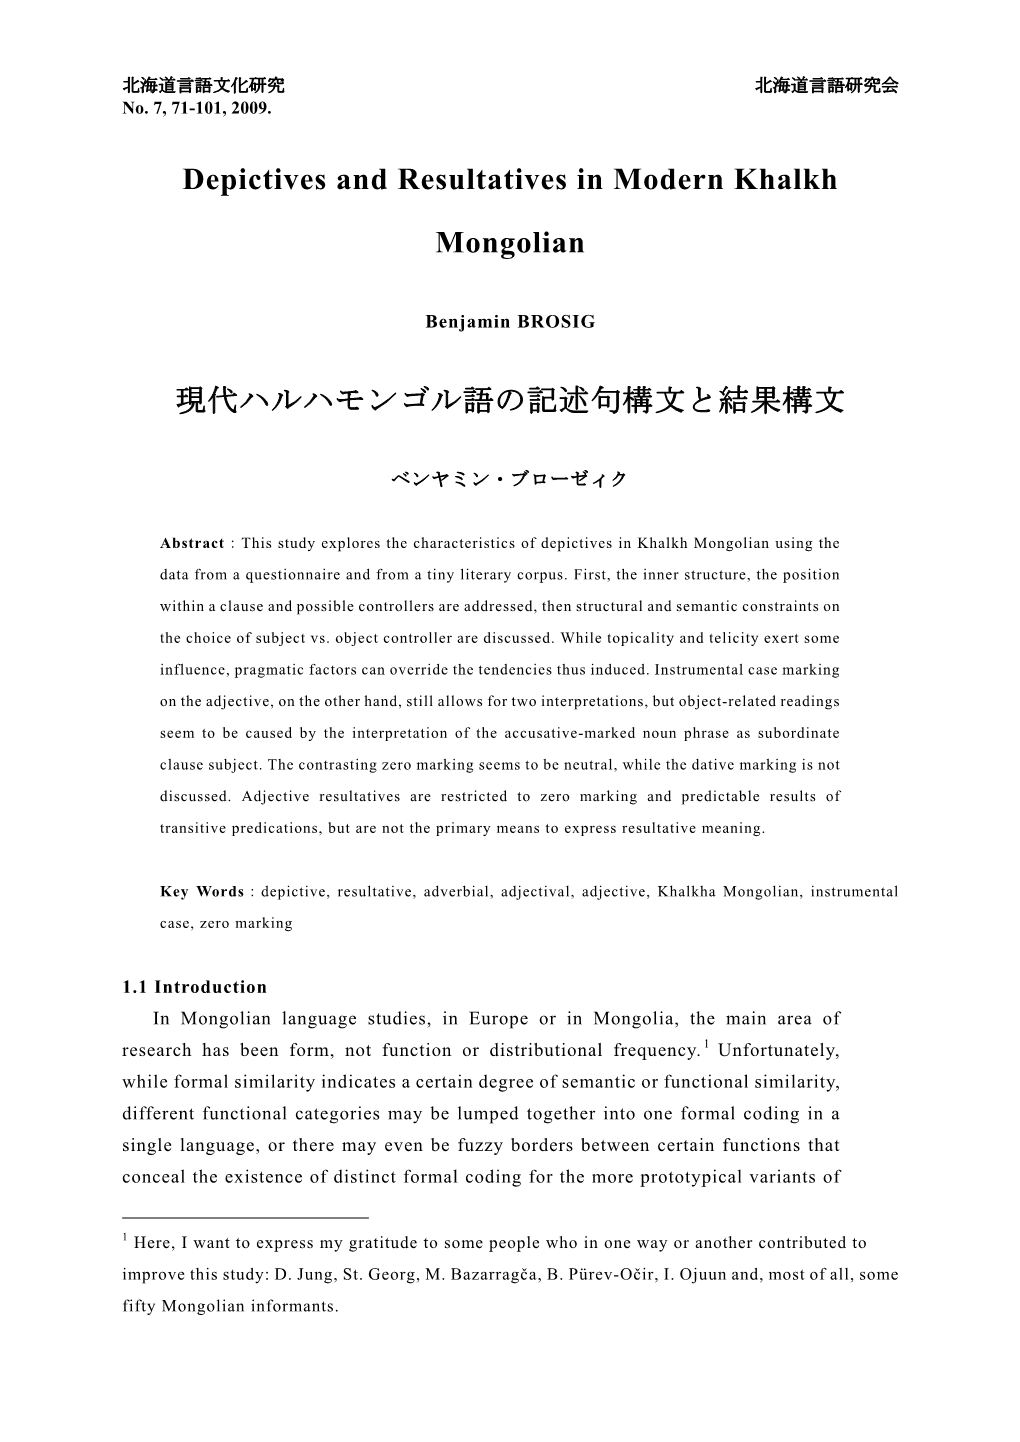 Depictives and Resultatives in Modern Khalkh Mongolian 現代ハルハモンゴル語の記述句構文と結果構文